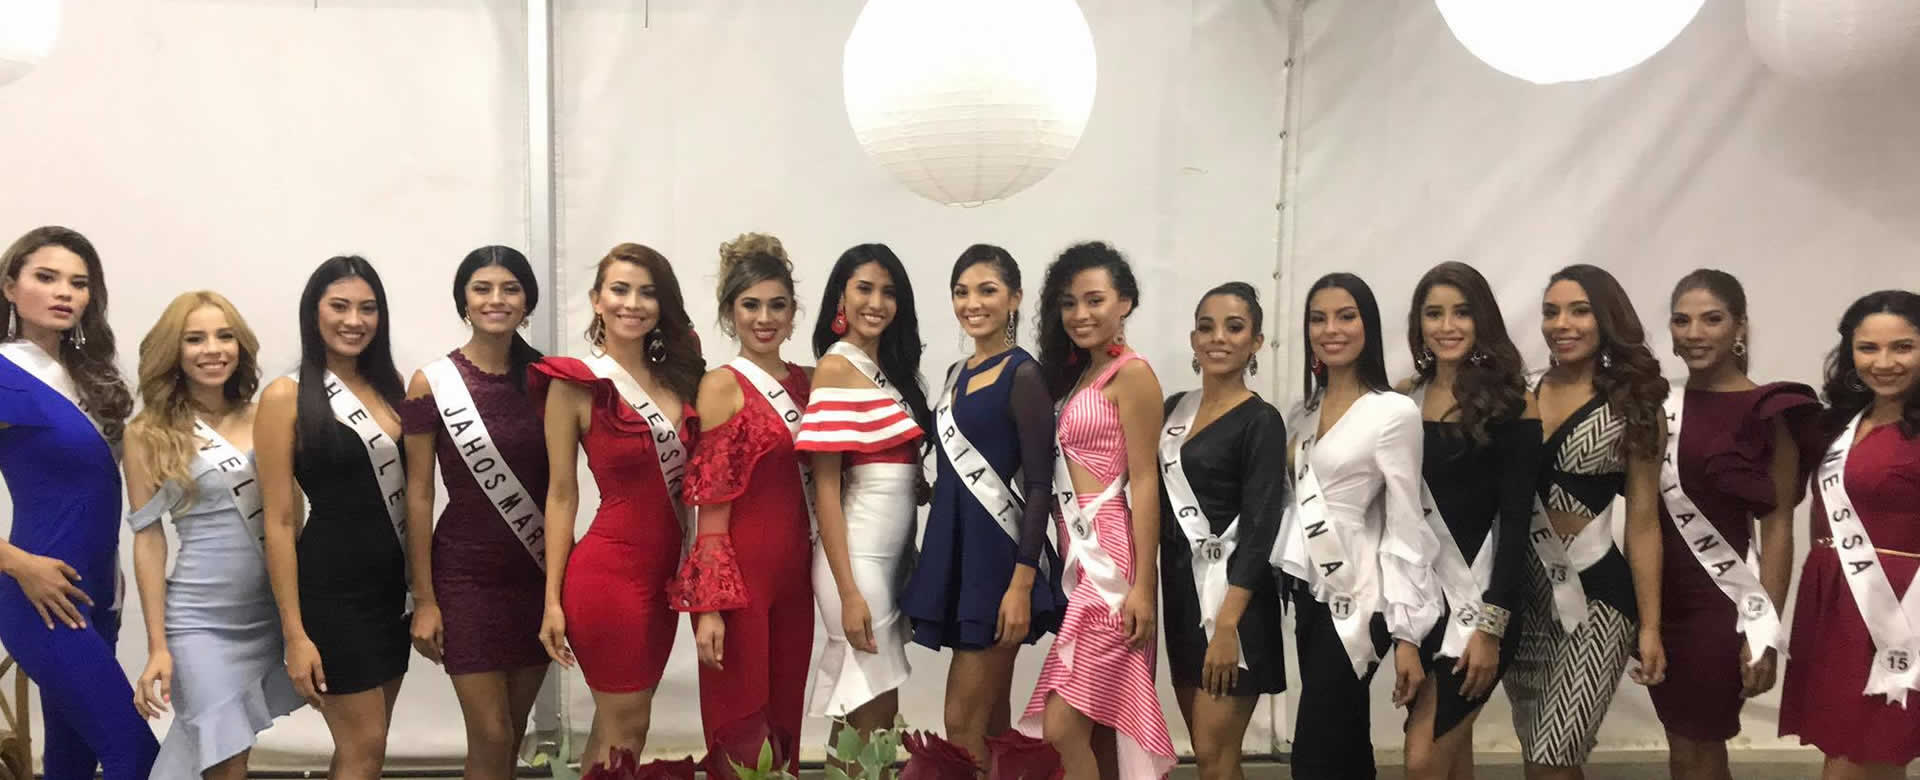 ¿Ya sabes cuales son las candidatas favoritas de Miss Mundo Nicaragua 2019?